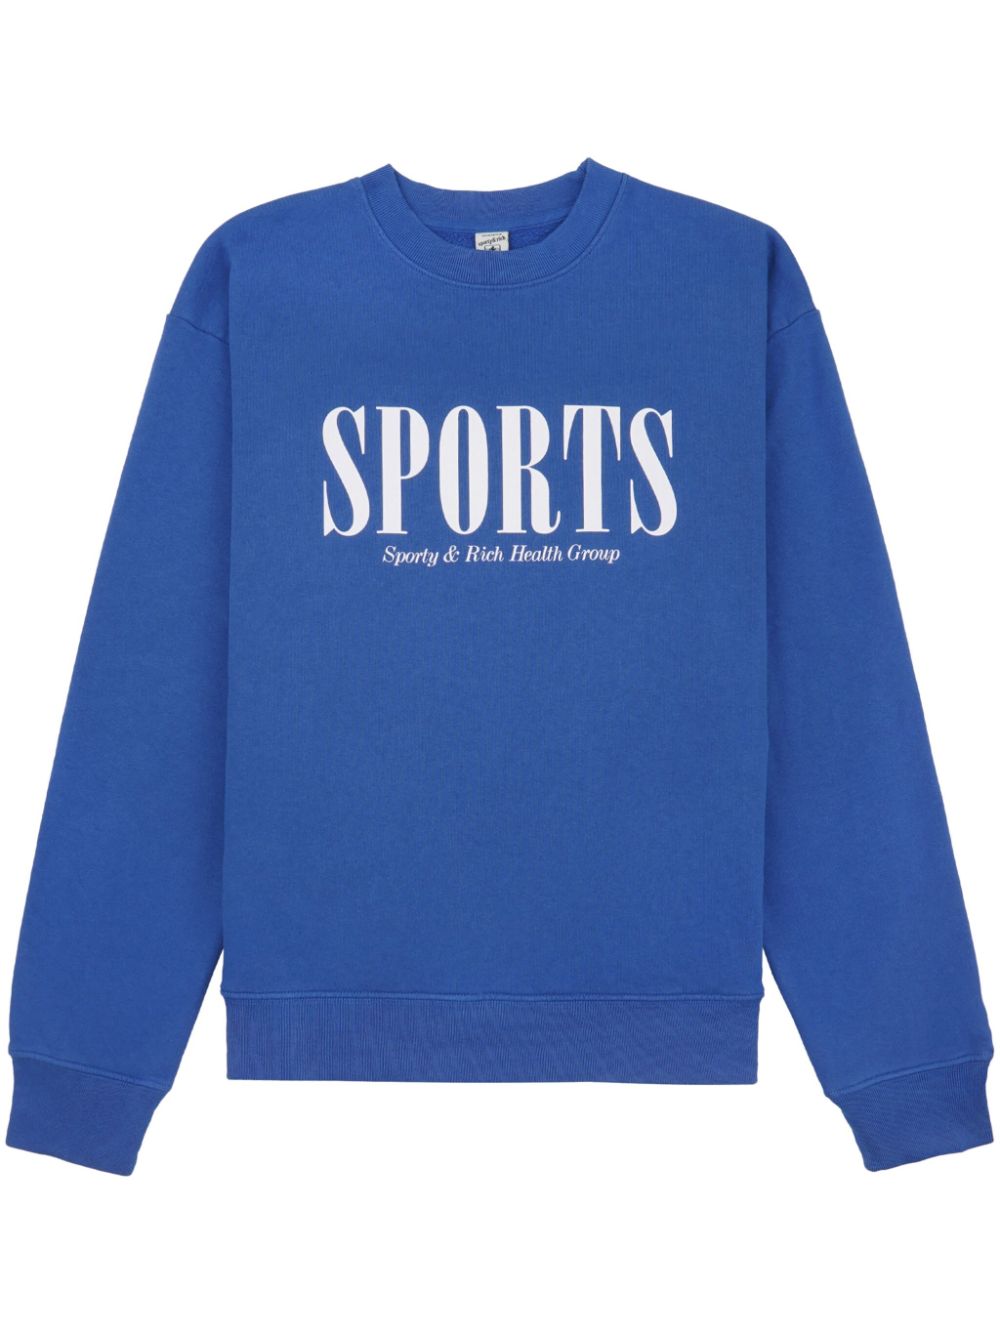 Sports cotton sweatshirt